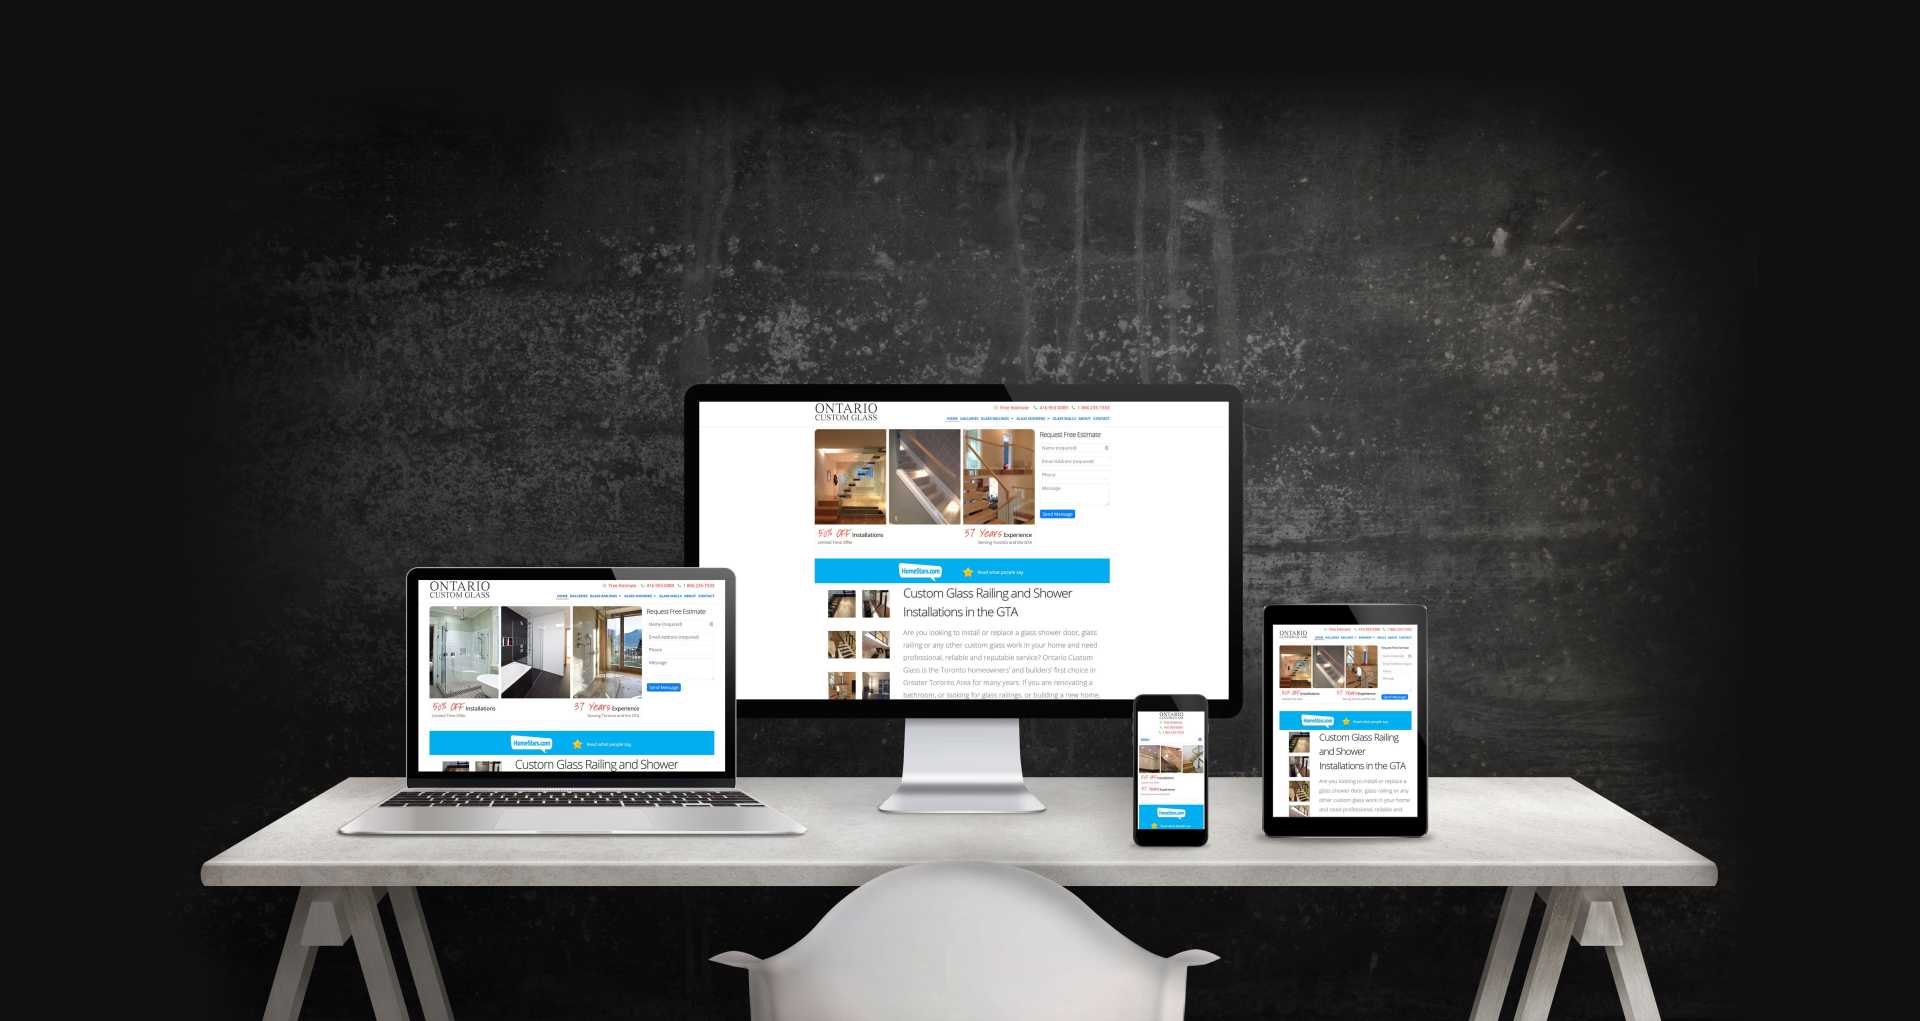 Mockup of Ontario Custom Glass website showing desktop and mobile displays.